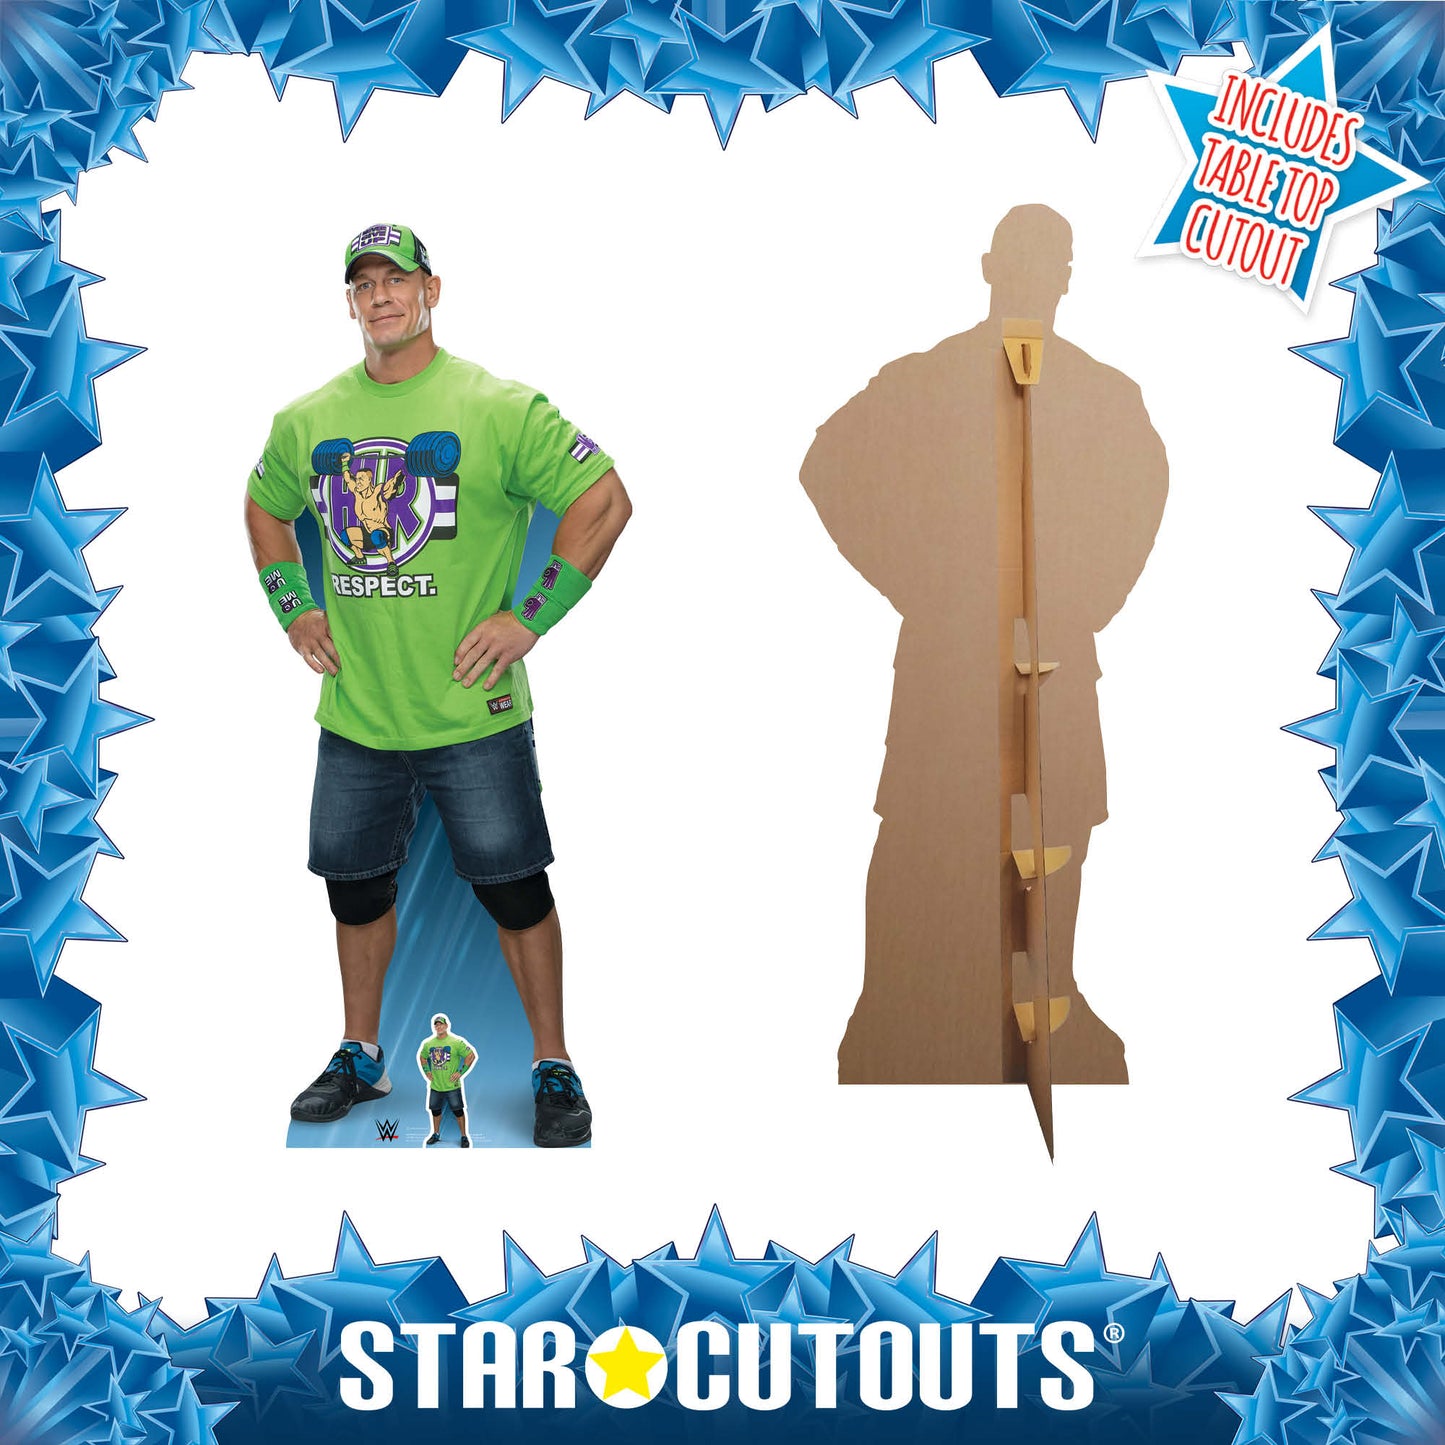 John Cena Wrestler Cardboard Cutout Lifesize